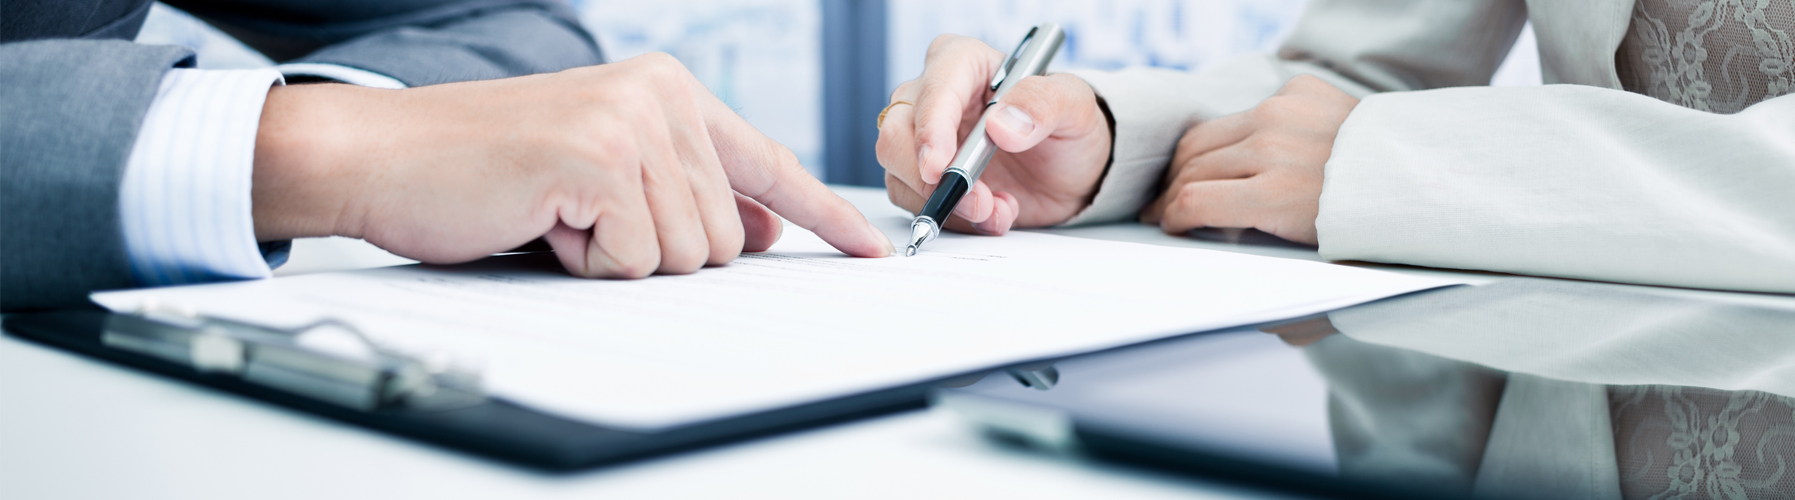 Written service agreements: should vs. must Image